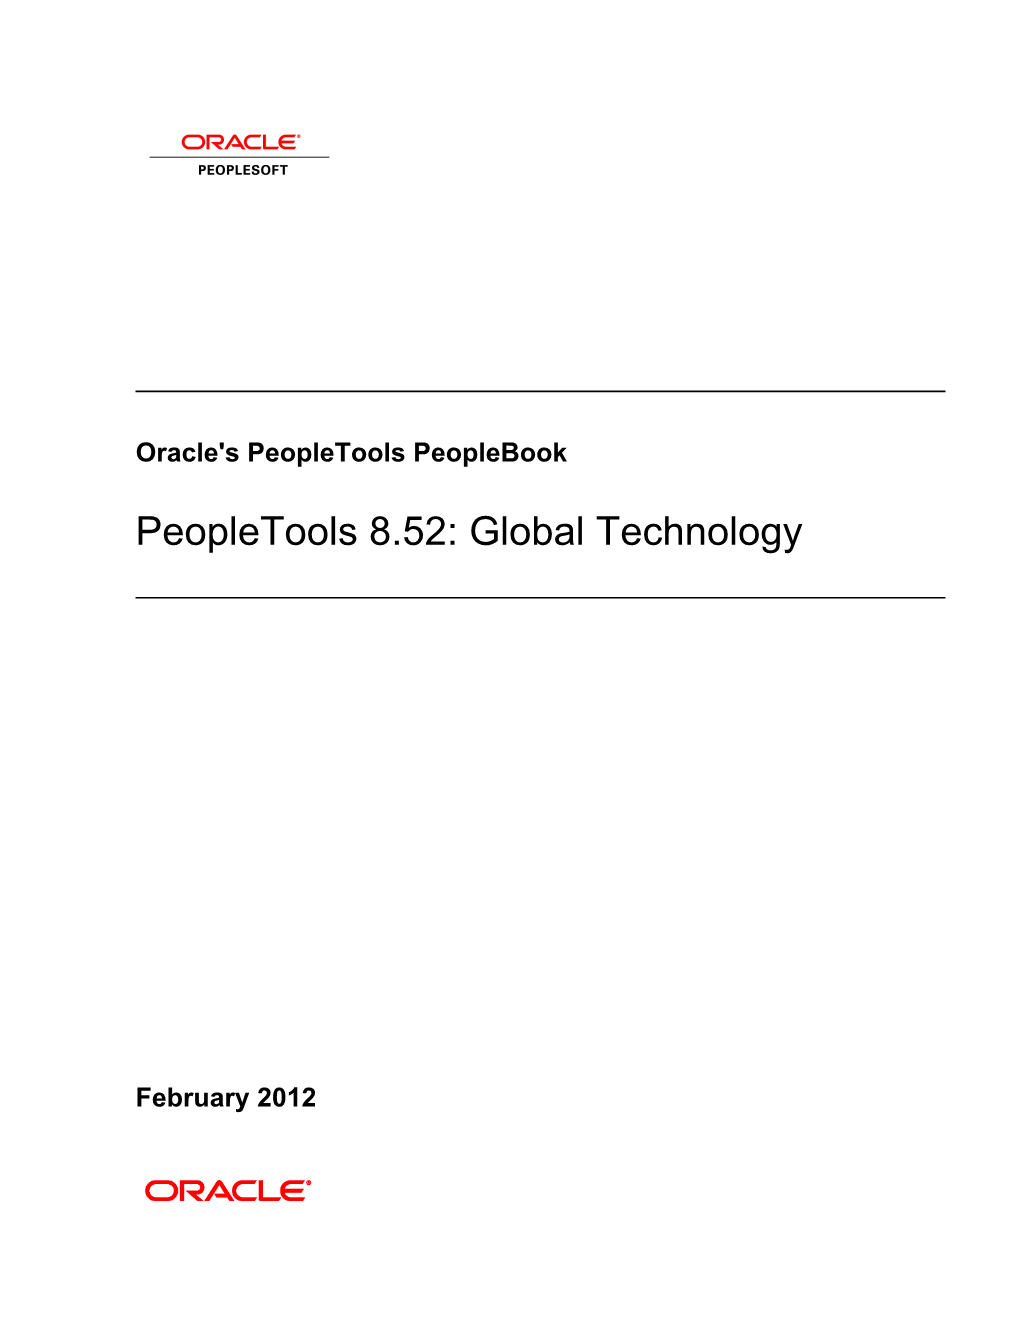 Peopletools 8.52: Global Technology